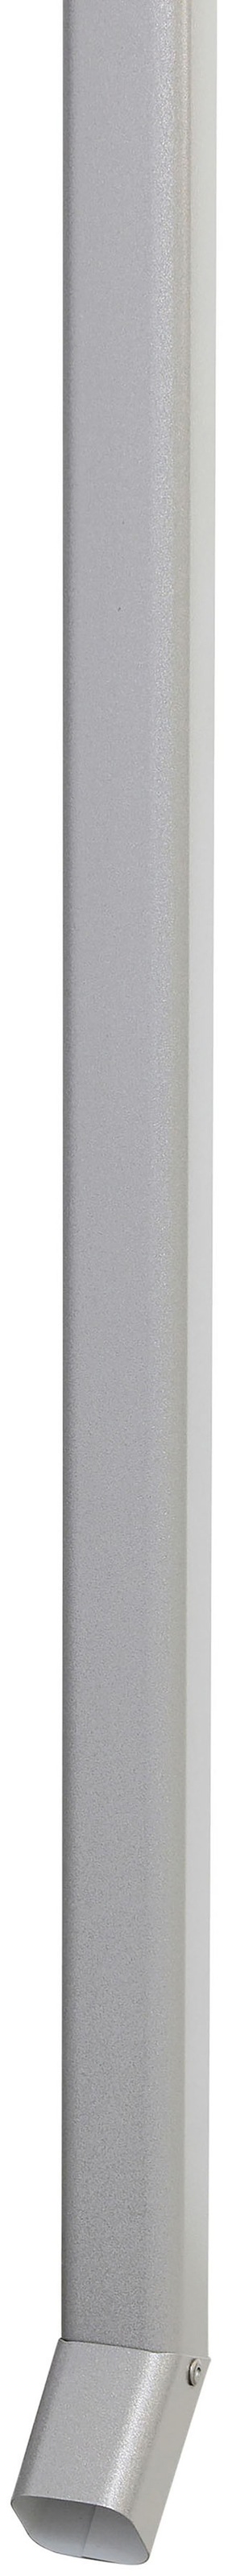 Regenfallrohr, (Set, 2 tlg.), für Gerätehaus HighLine, aus feuerverzinktem Stahl